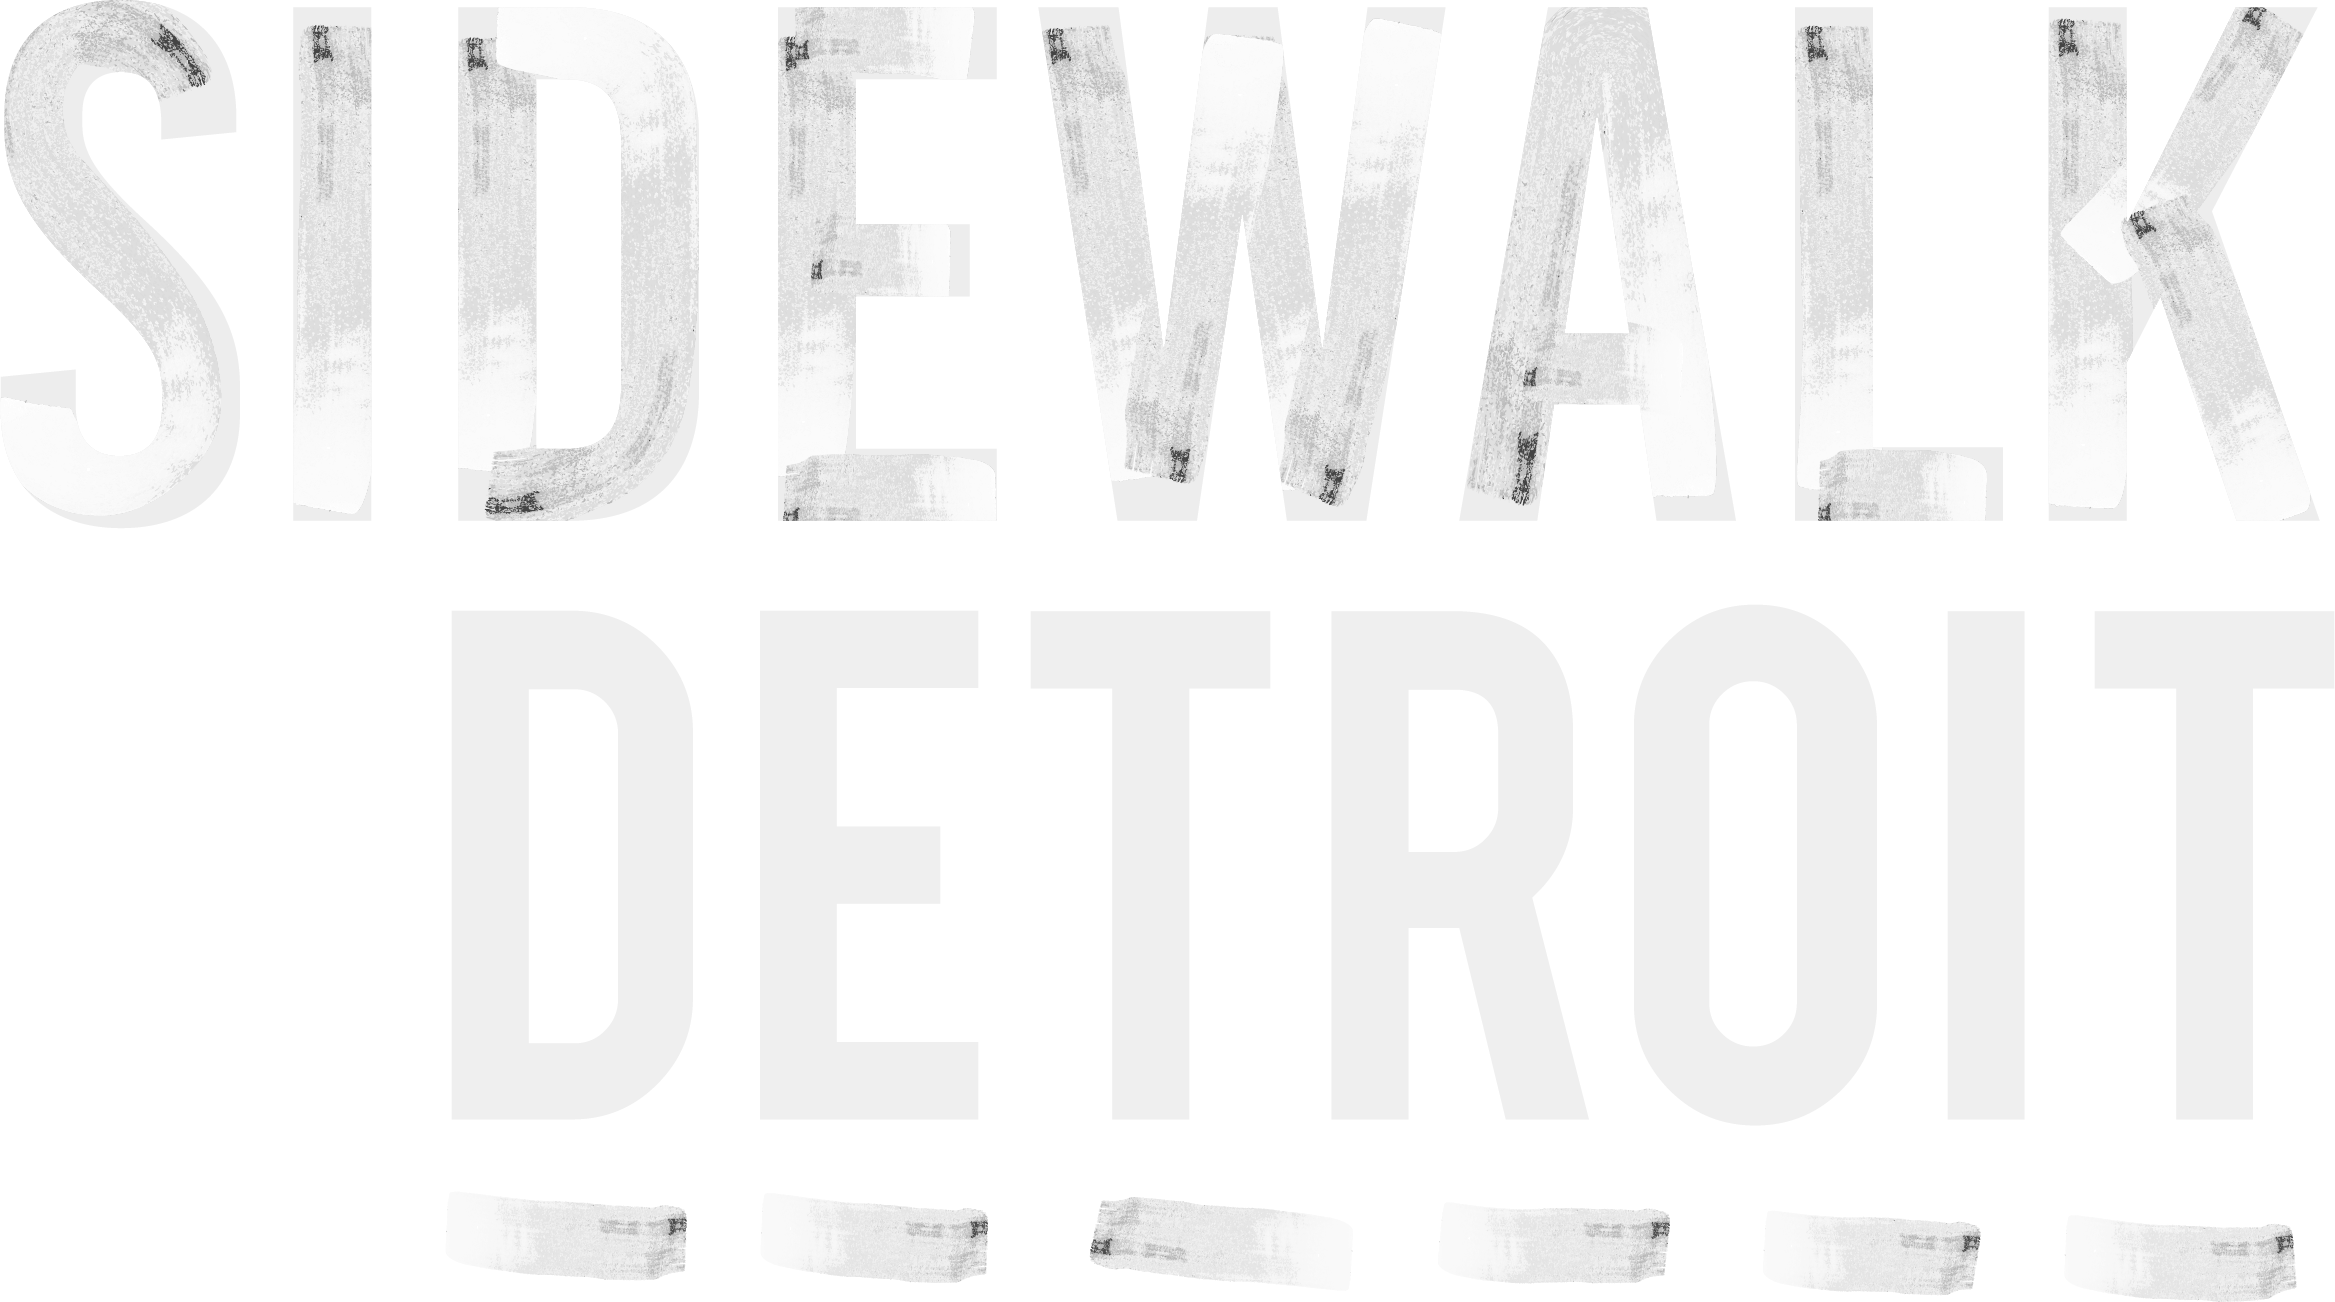 Sidewalk Detroit